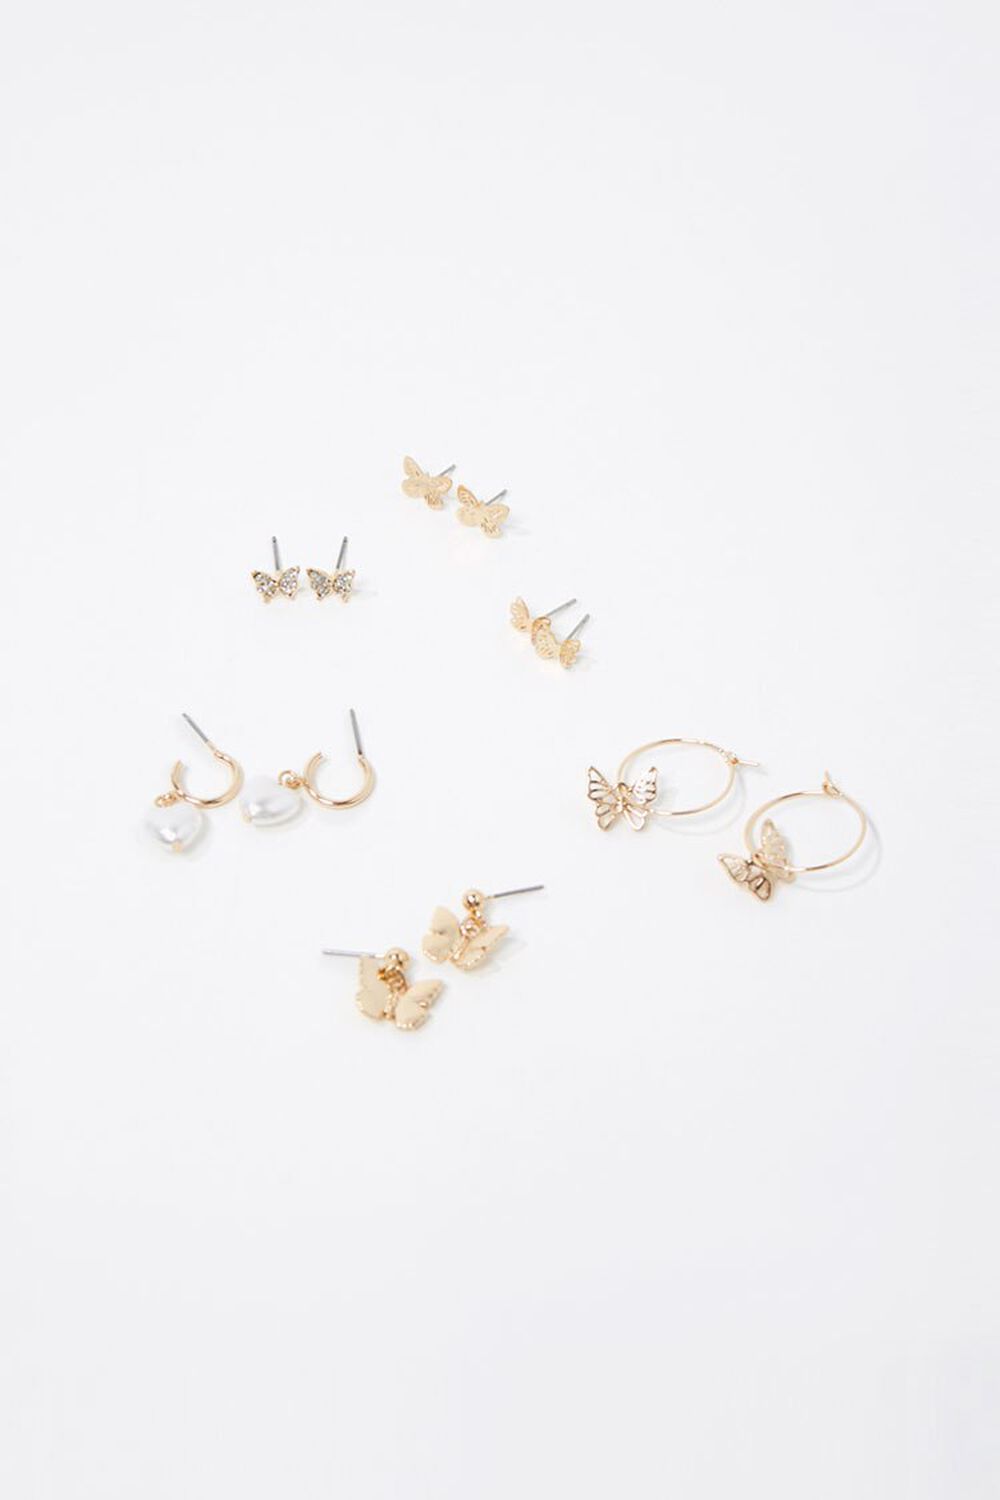 GOLD Butterfly Charm Hoop & Stud Earring Set, image 1